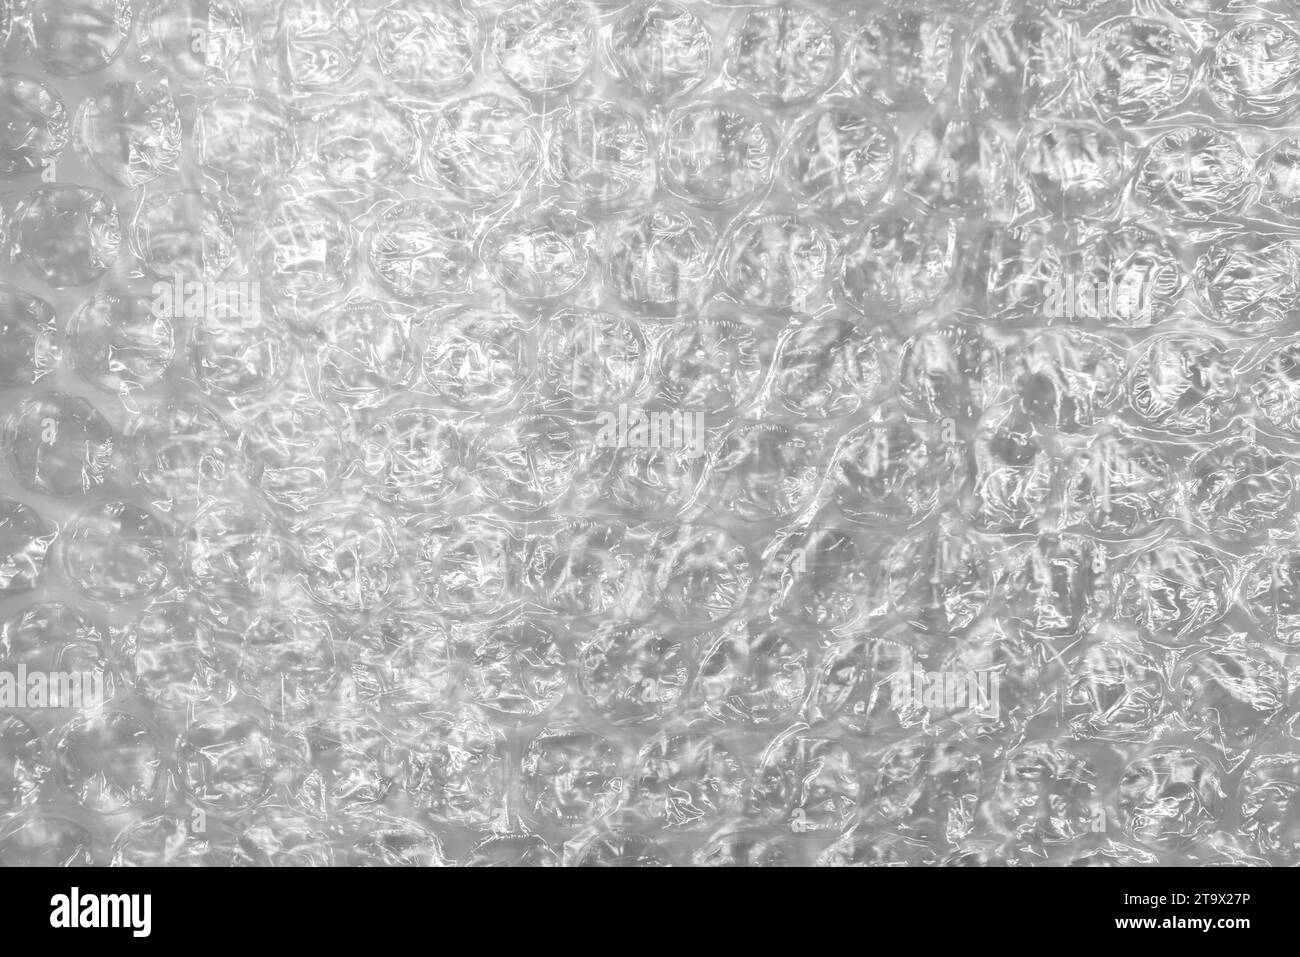 Air bubble packing -Fotos und -Bildmaterial in hoher Auflösung – Alamy